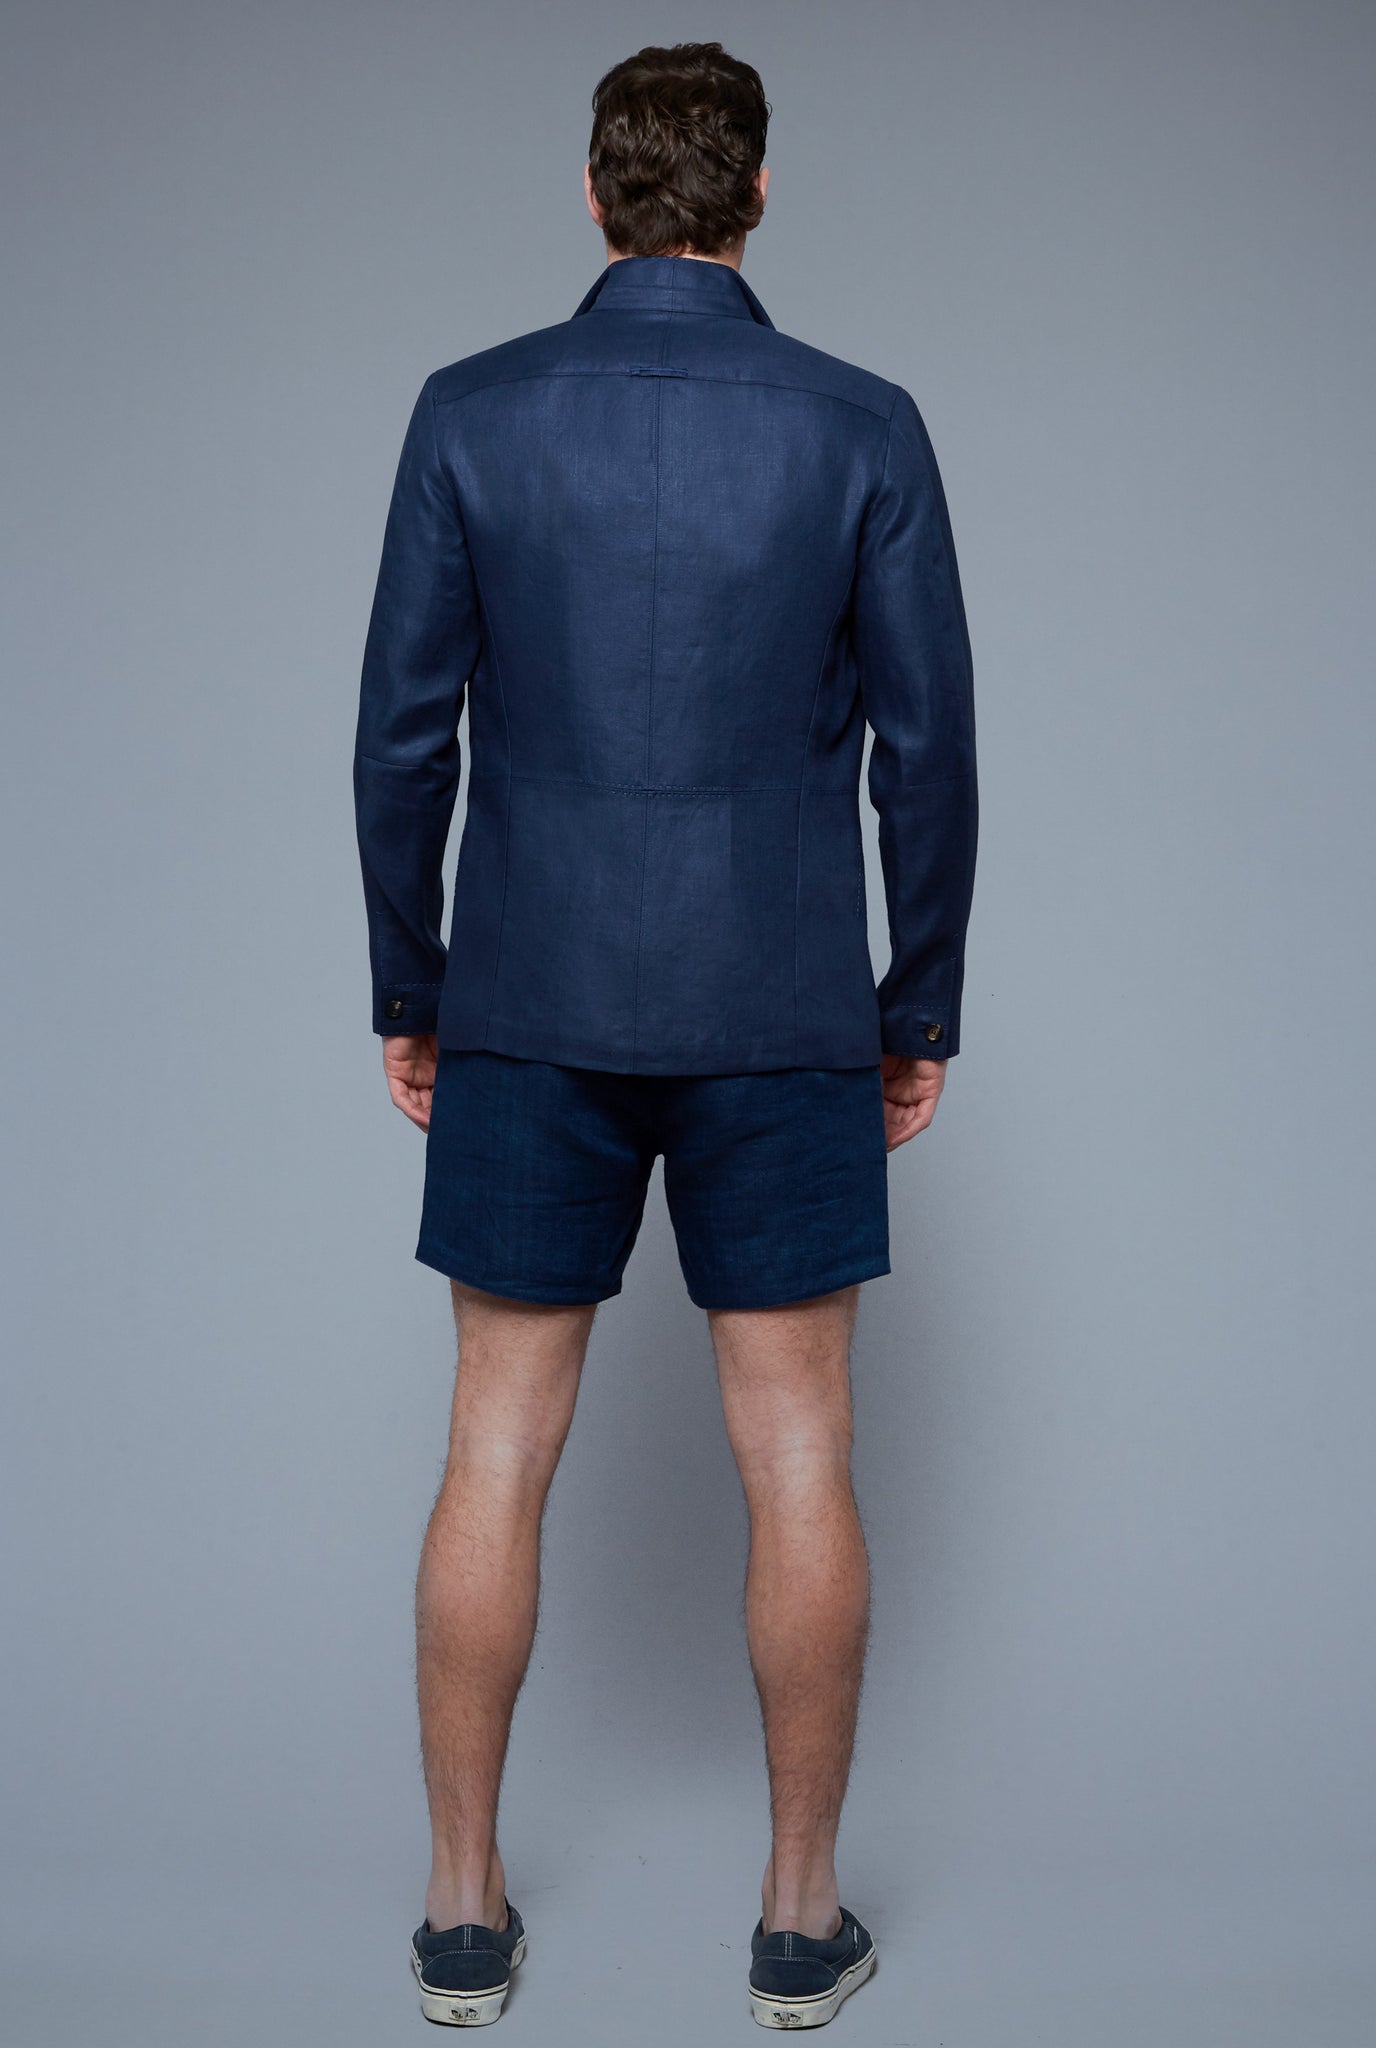 Back View: Model Hans Weiner wearing Architect's Jacket